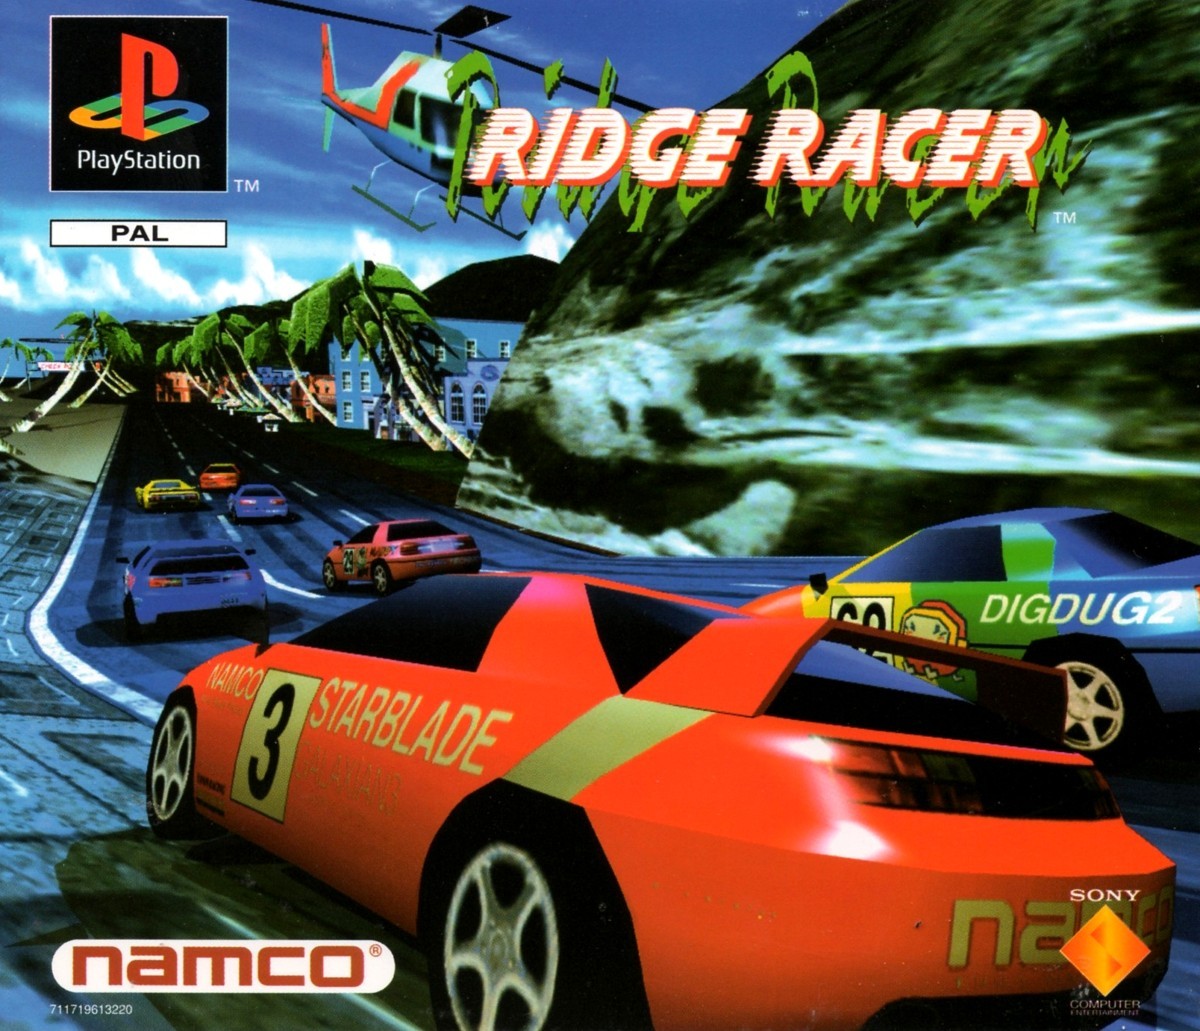 Ridge Racer cover